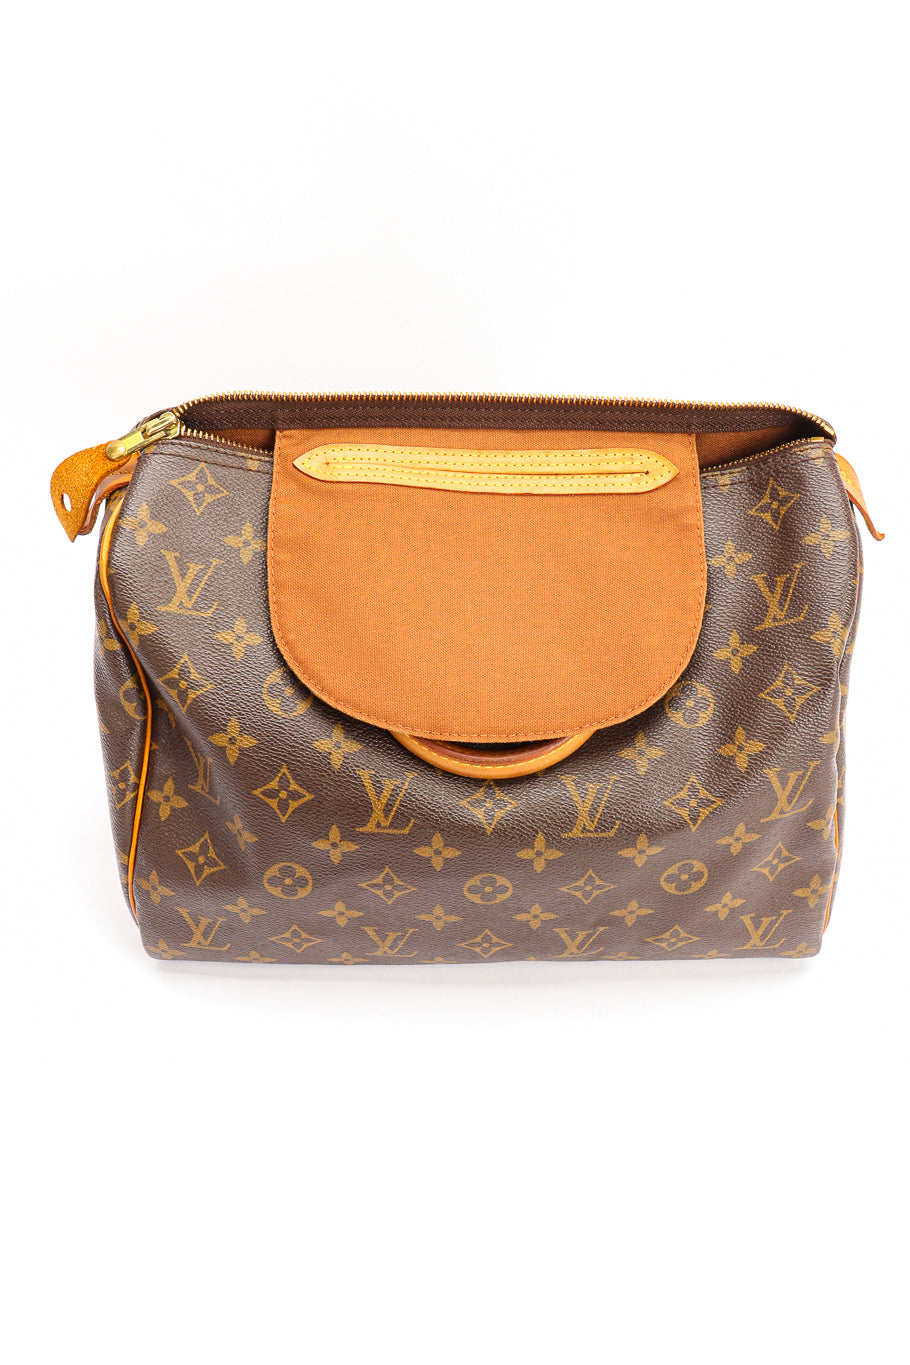 Vintage Louis Vuitton Classic Monogram Speedy 30 Bag III inner slip pocket @Recessla